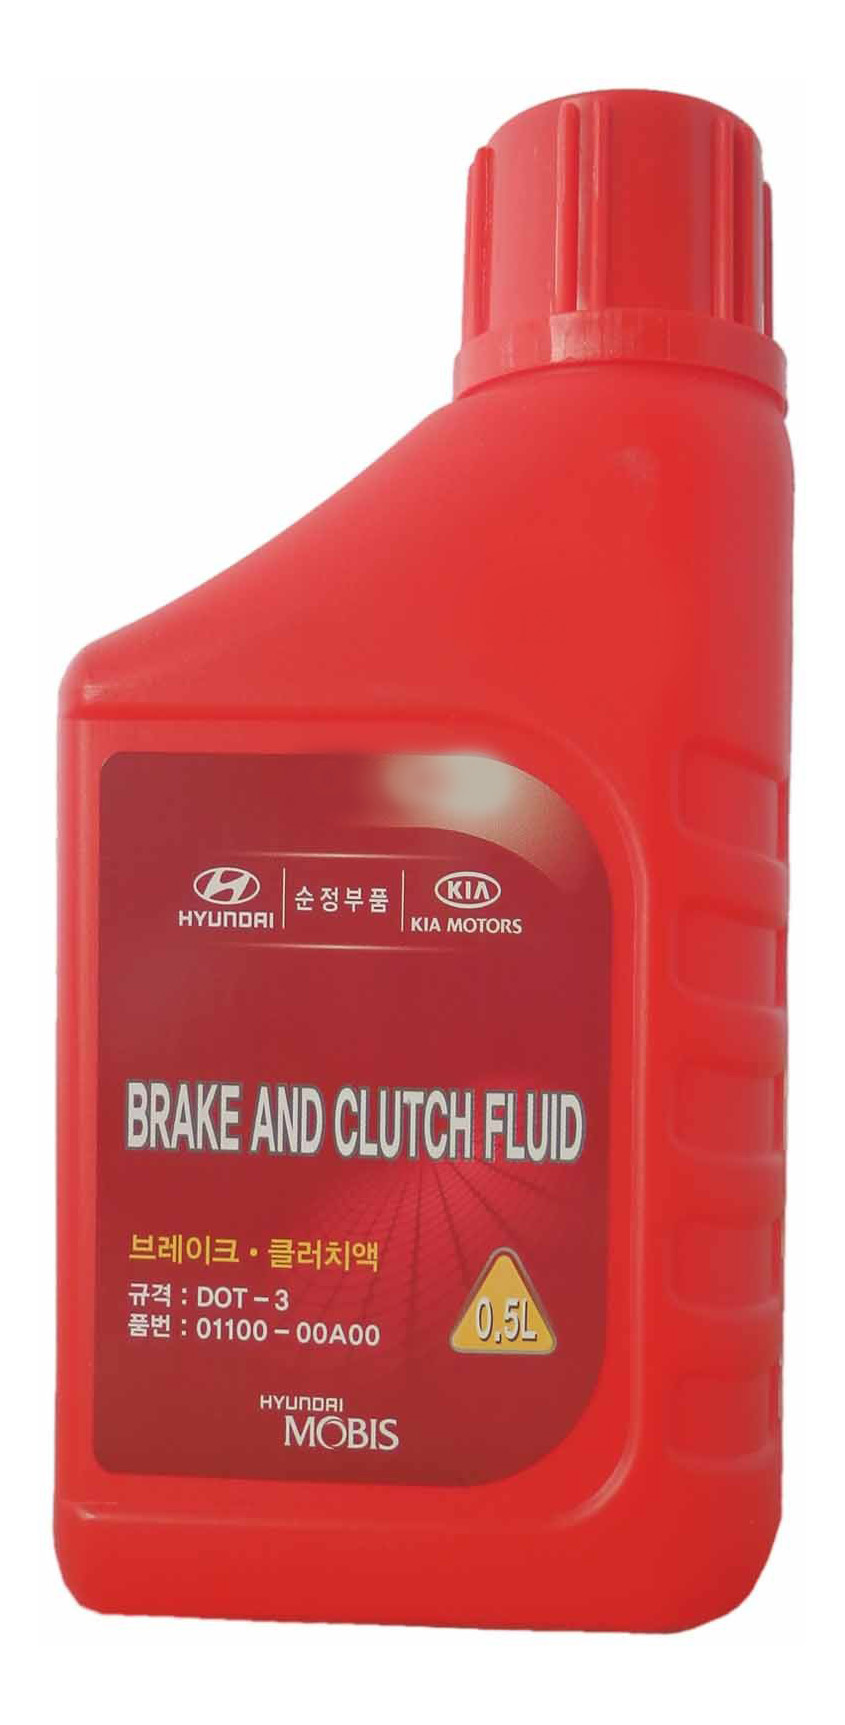 Тормозная жидкость KIA Brake Fluid 0.5л 0110000A00